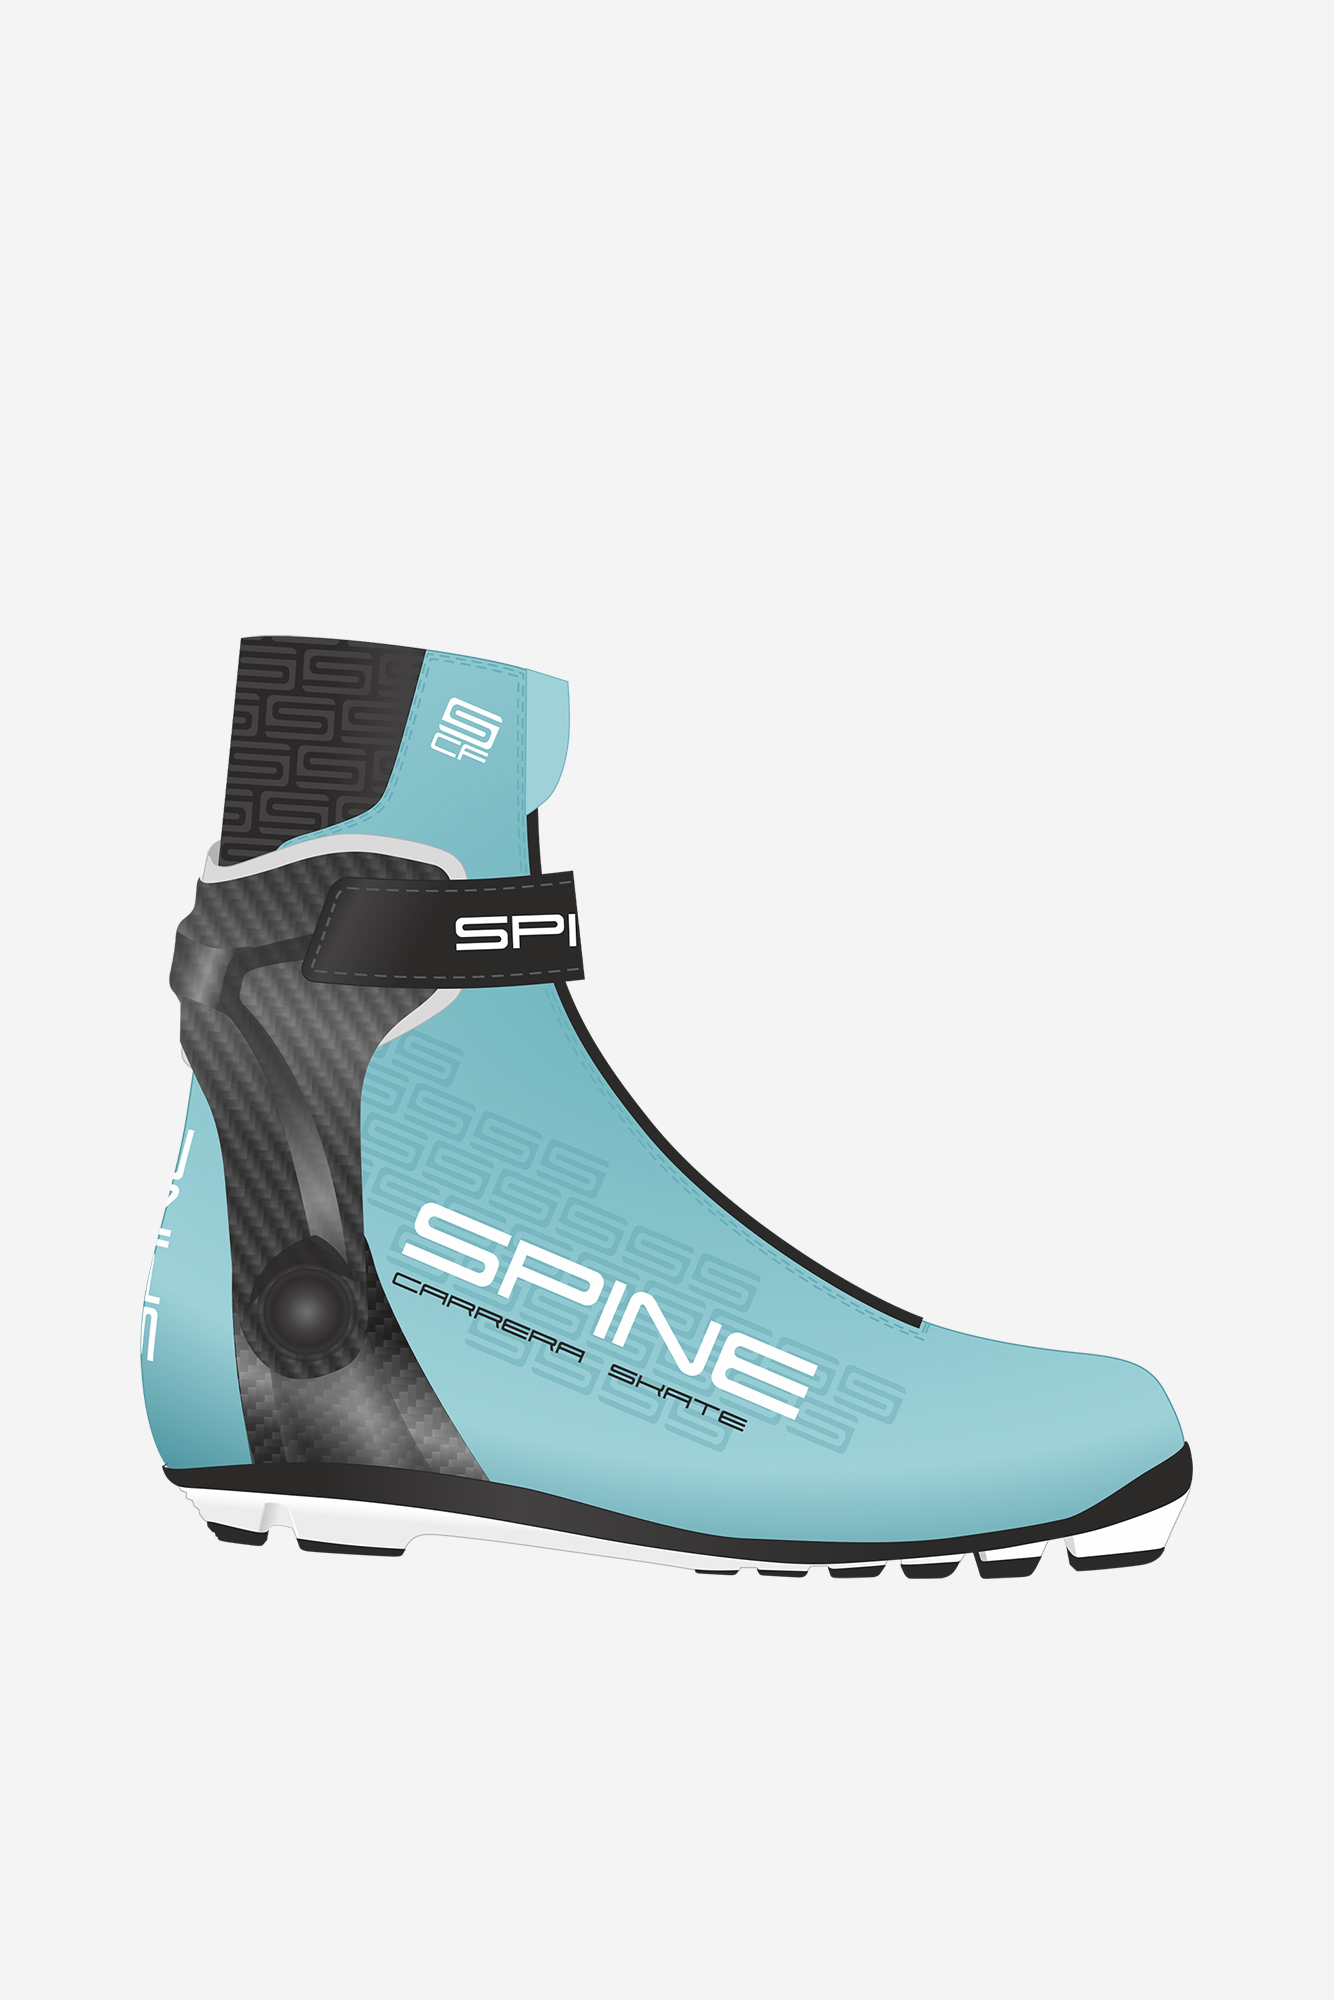 Spine - Nordic ski boots - Carrera Skate 598/1-22 S/MCarrera Skate 598/1-22  S/MCarrera Skate 598/1-22 S/M